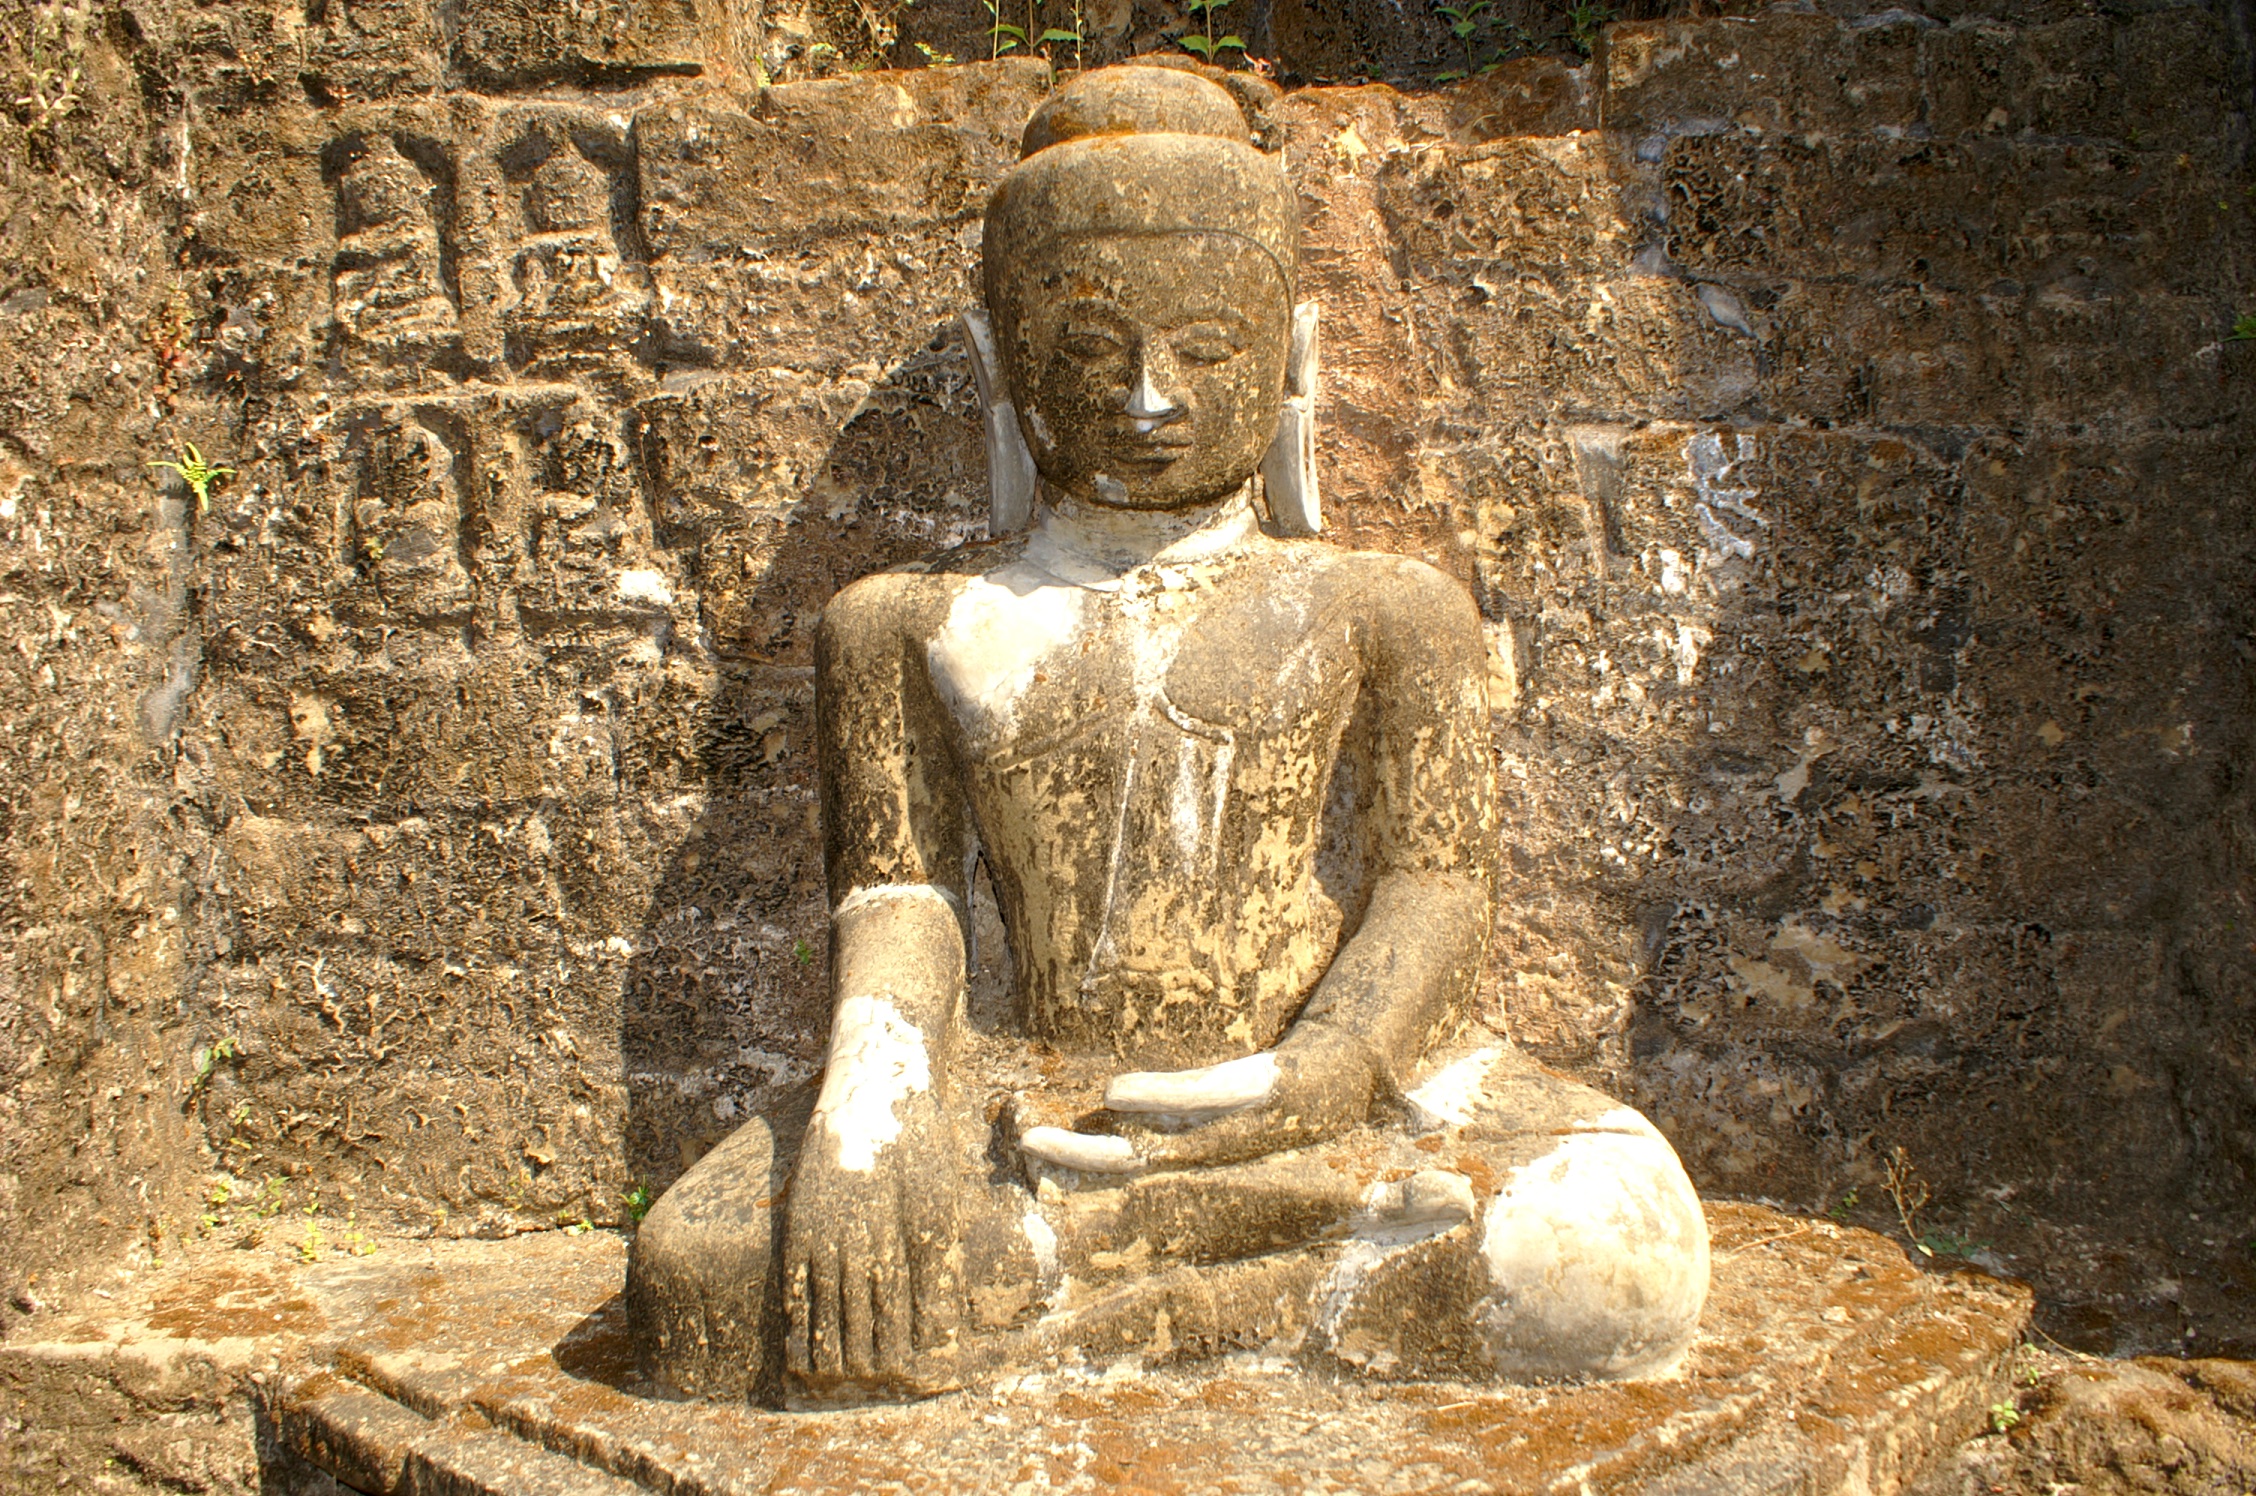 a very big stone statue near a wall